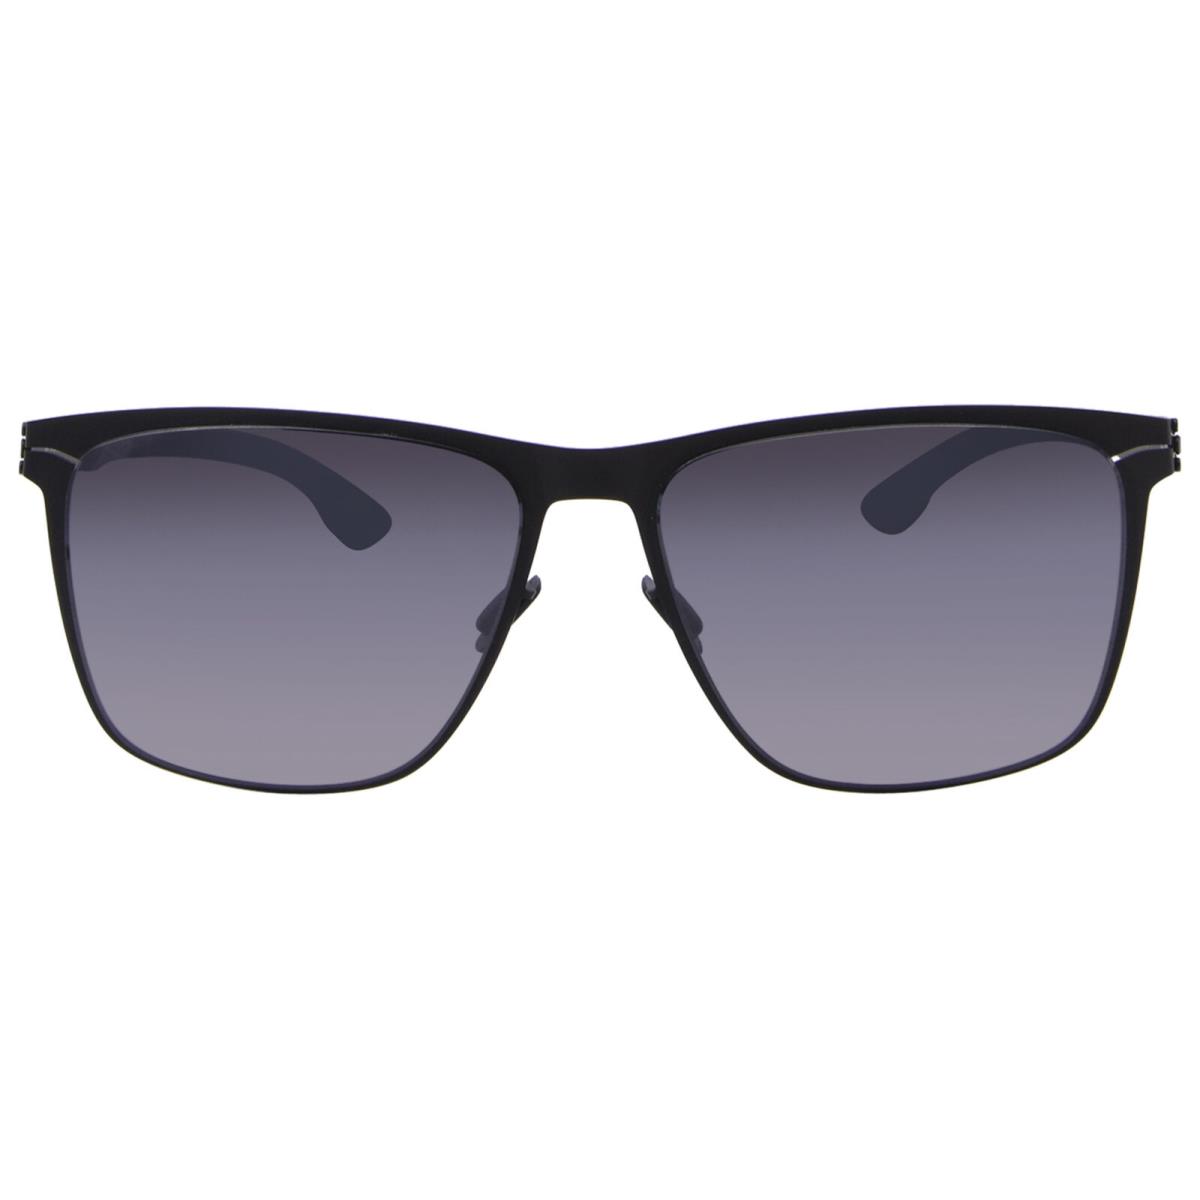 Ic Berlin Charlie Sunglasses Black/grey/black Gradient Square Shape 57mm